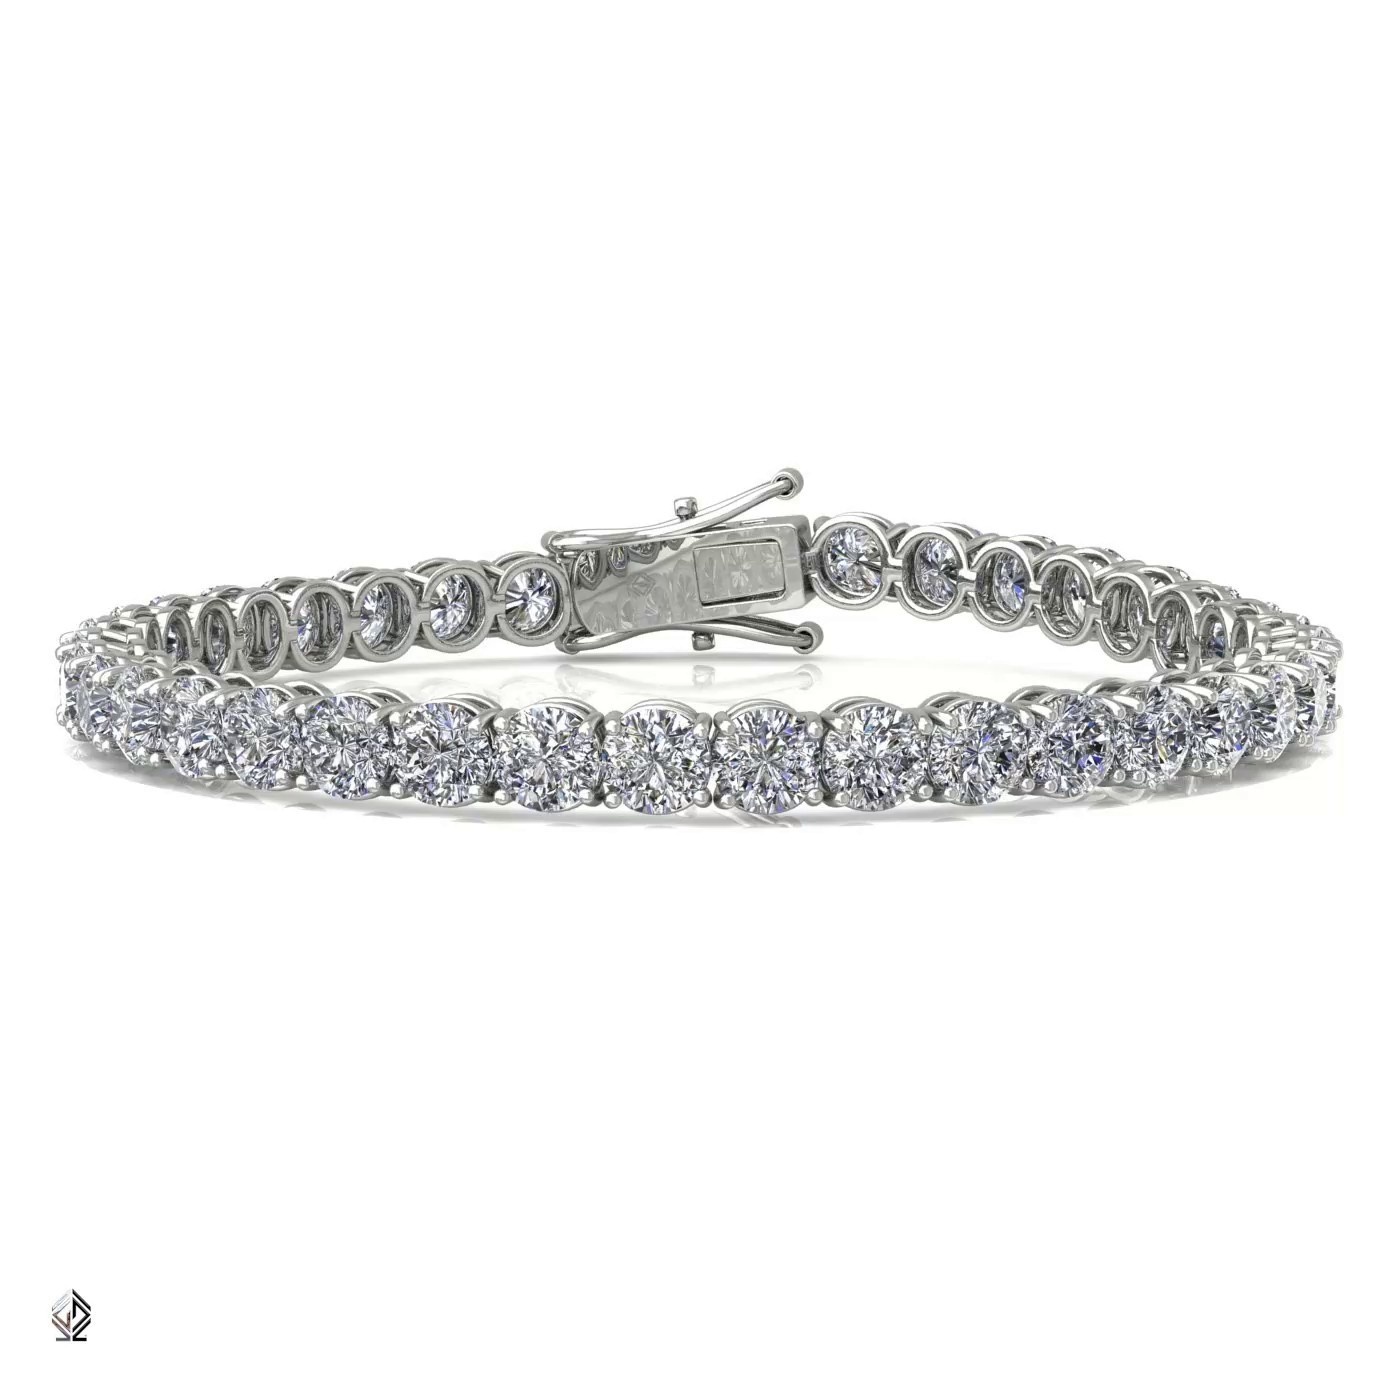 18k white gold 3.3mm 4 prong round shape diamond tennis bracelet in round setting Photos & images